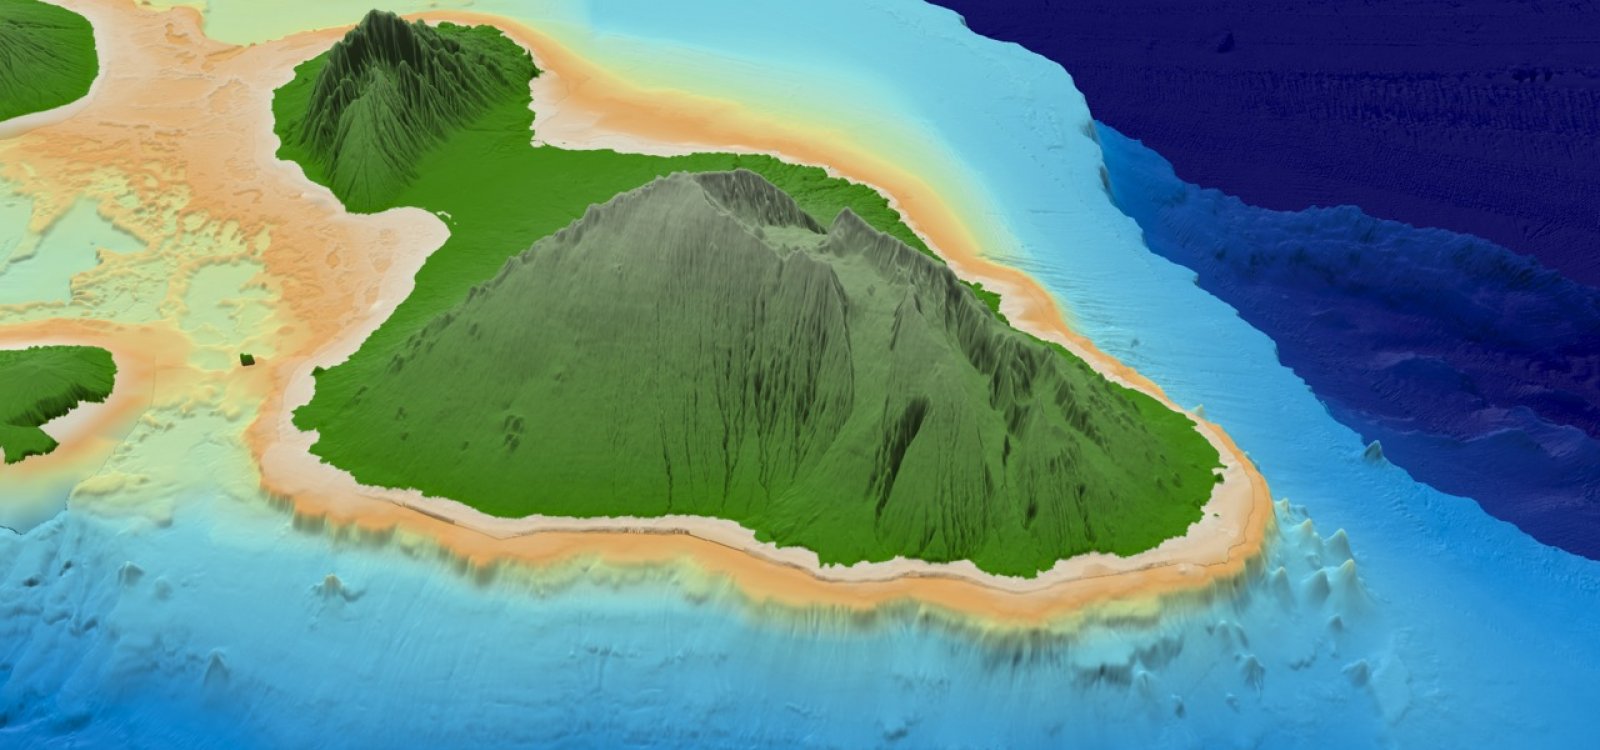 Hawaii 3d Map Images